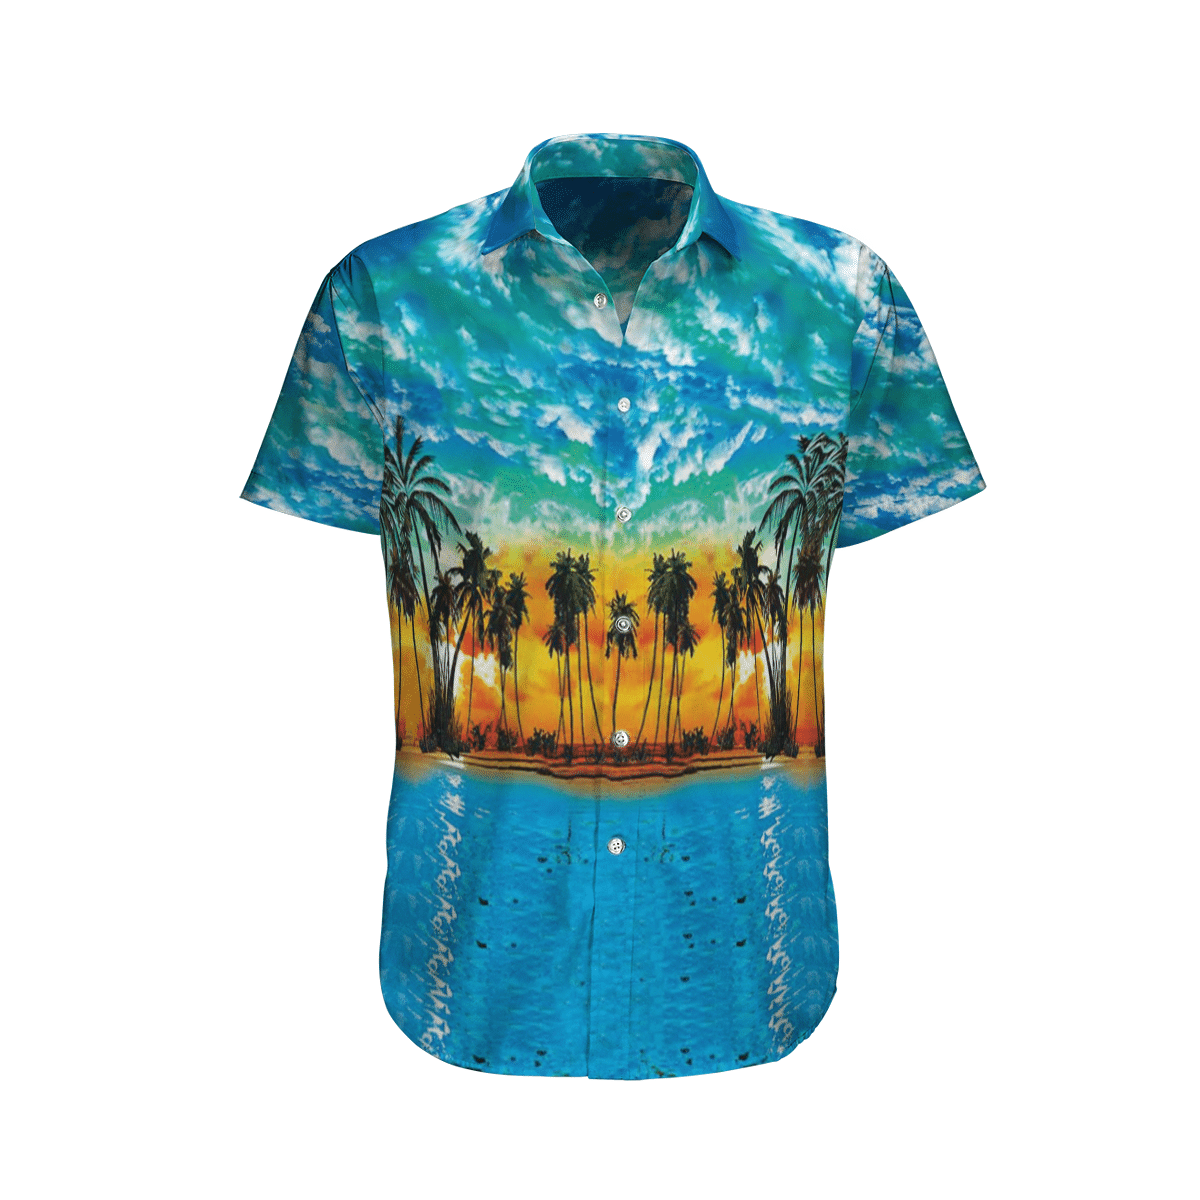 Get a new Hawaiian shirt to enjoy summer vacation 12